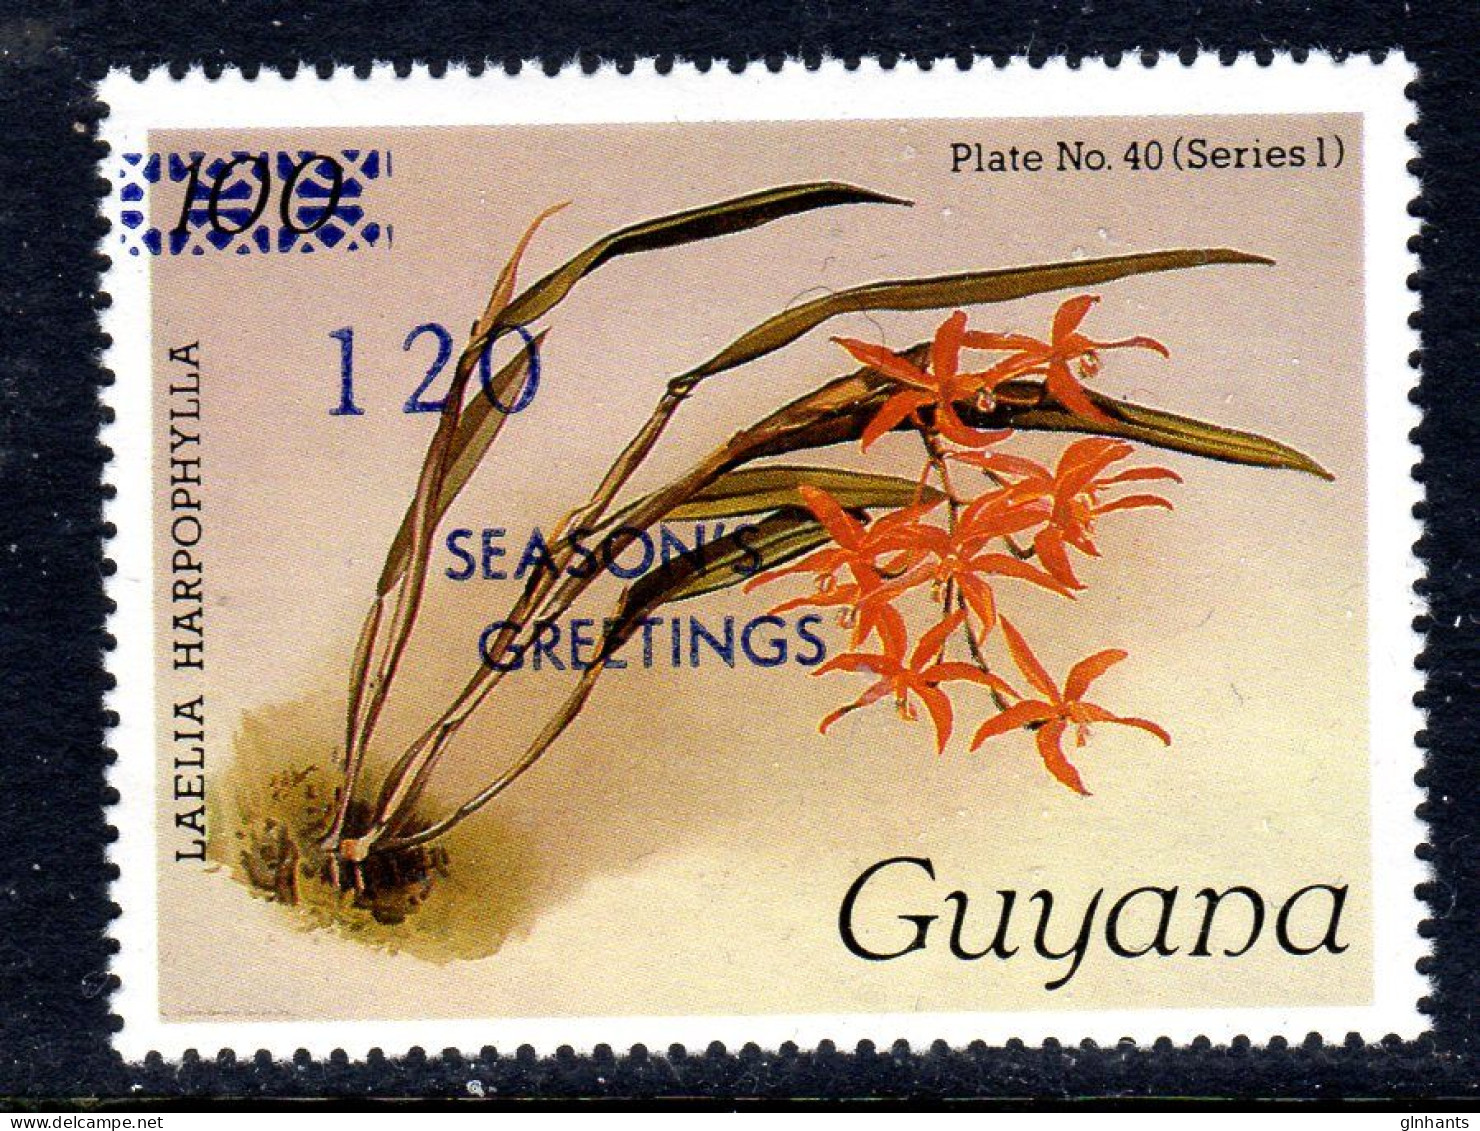 GUYANA - 1988 REICHENBACHIA ORCHIDS OVERPRINTED SEASONS GREETINGS PLATE 40 SERIES 1 FINE MNH ** SG 2523 - Guiana (1966-...)